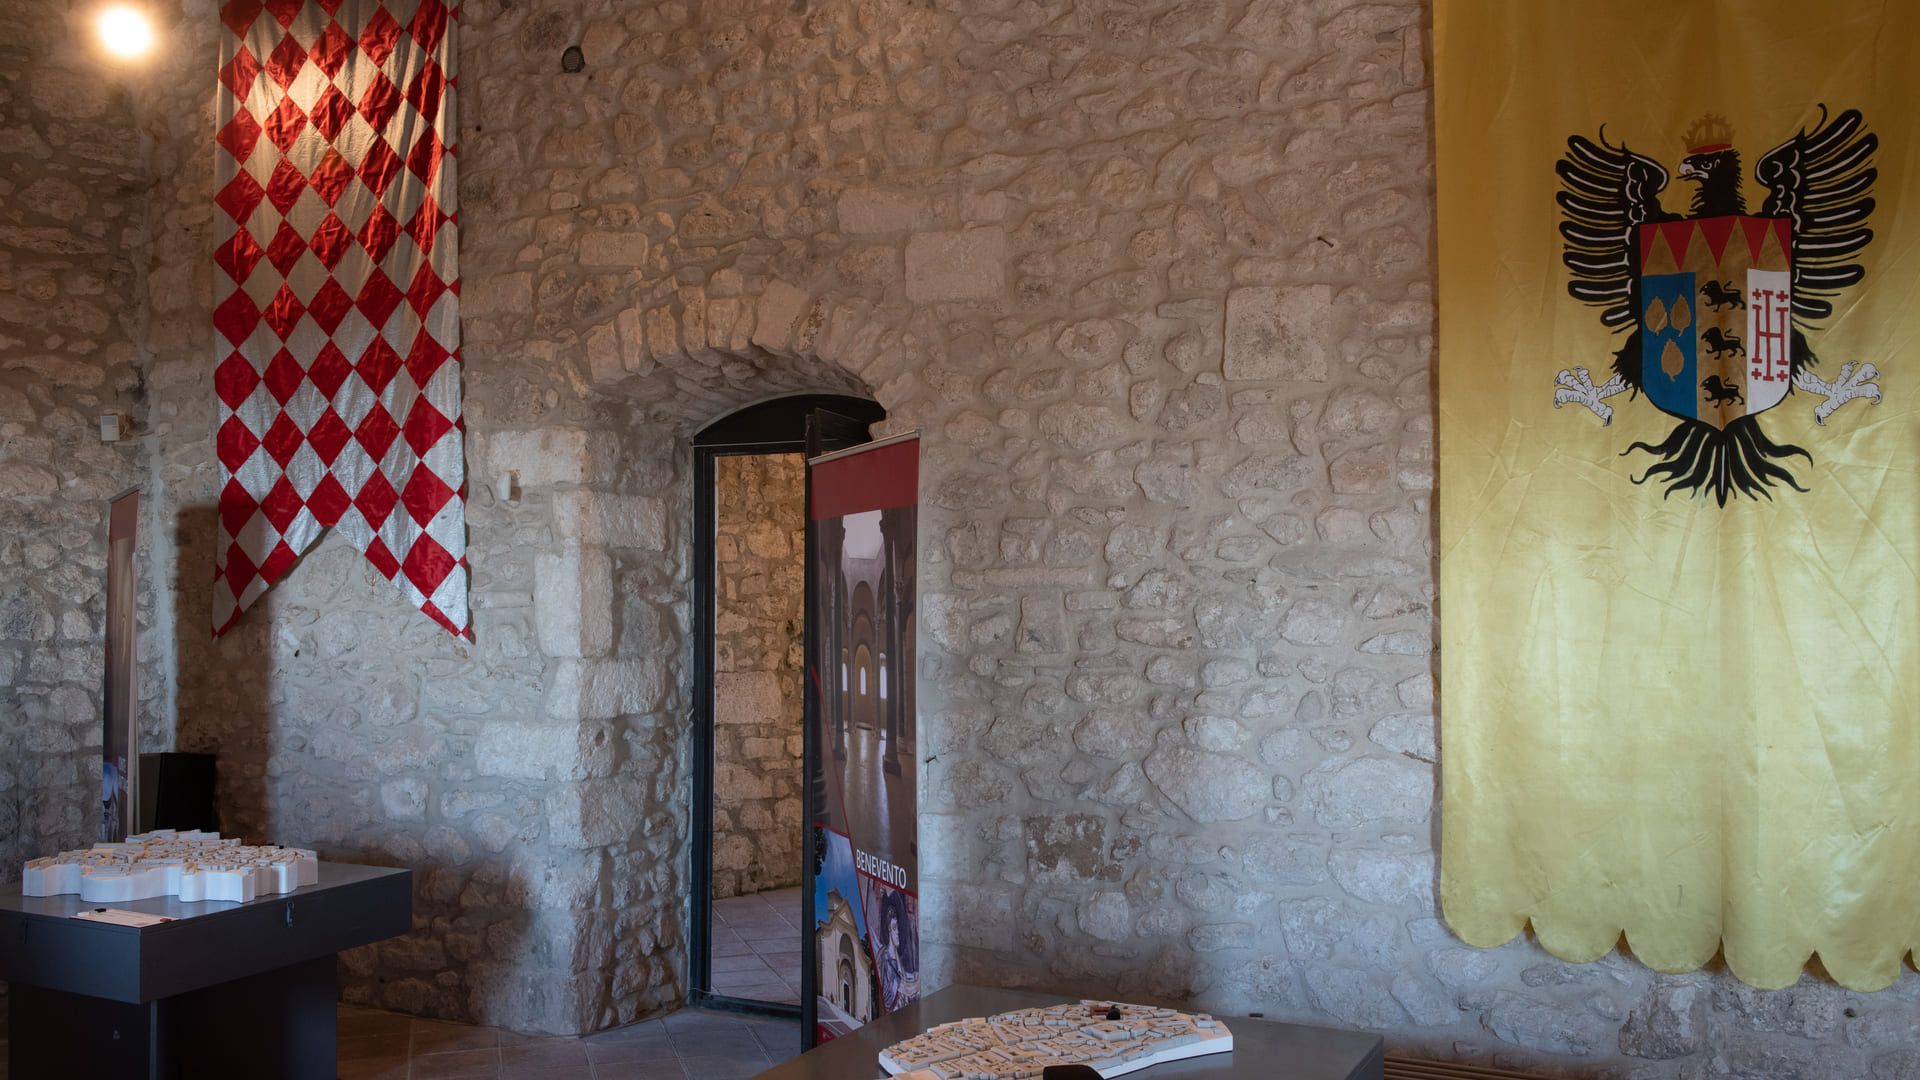 Castello Normanno-Svevo-Aragonese